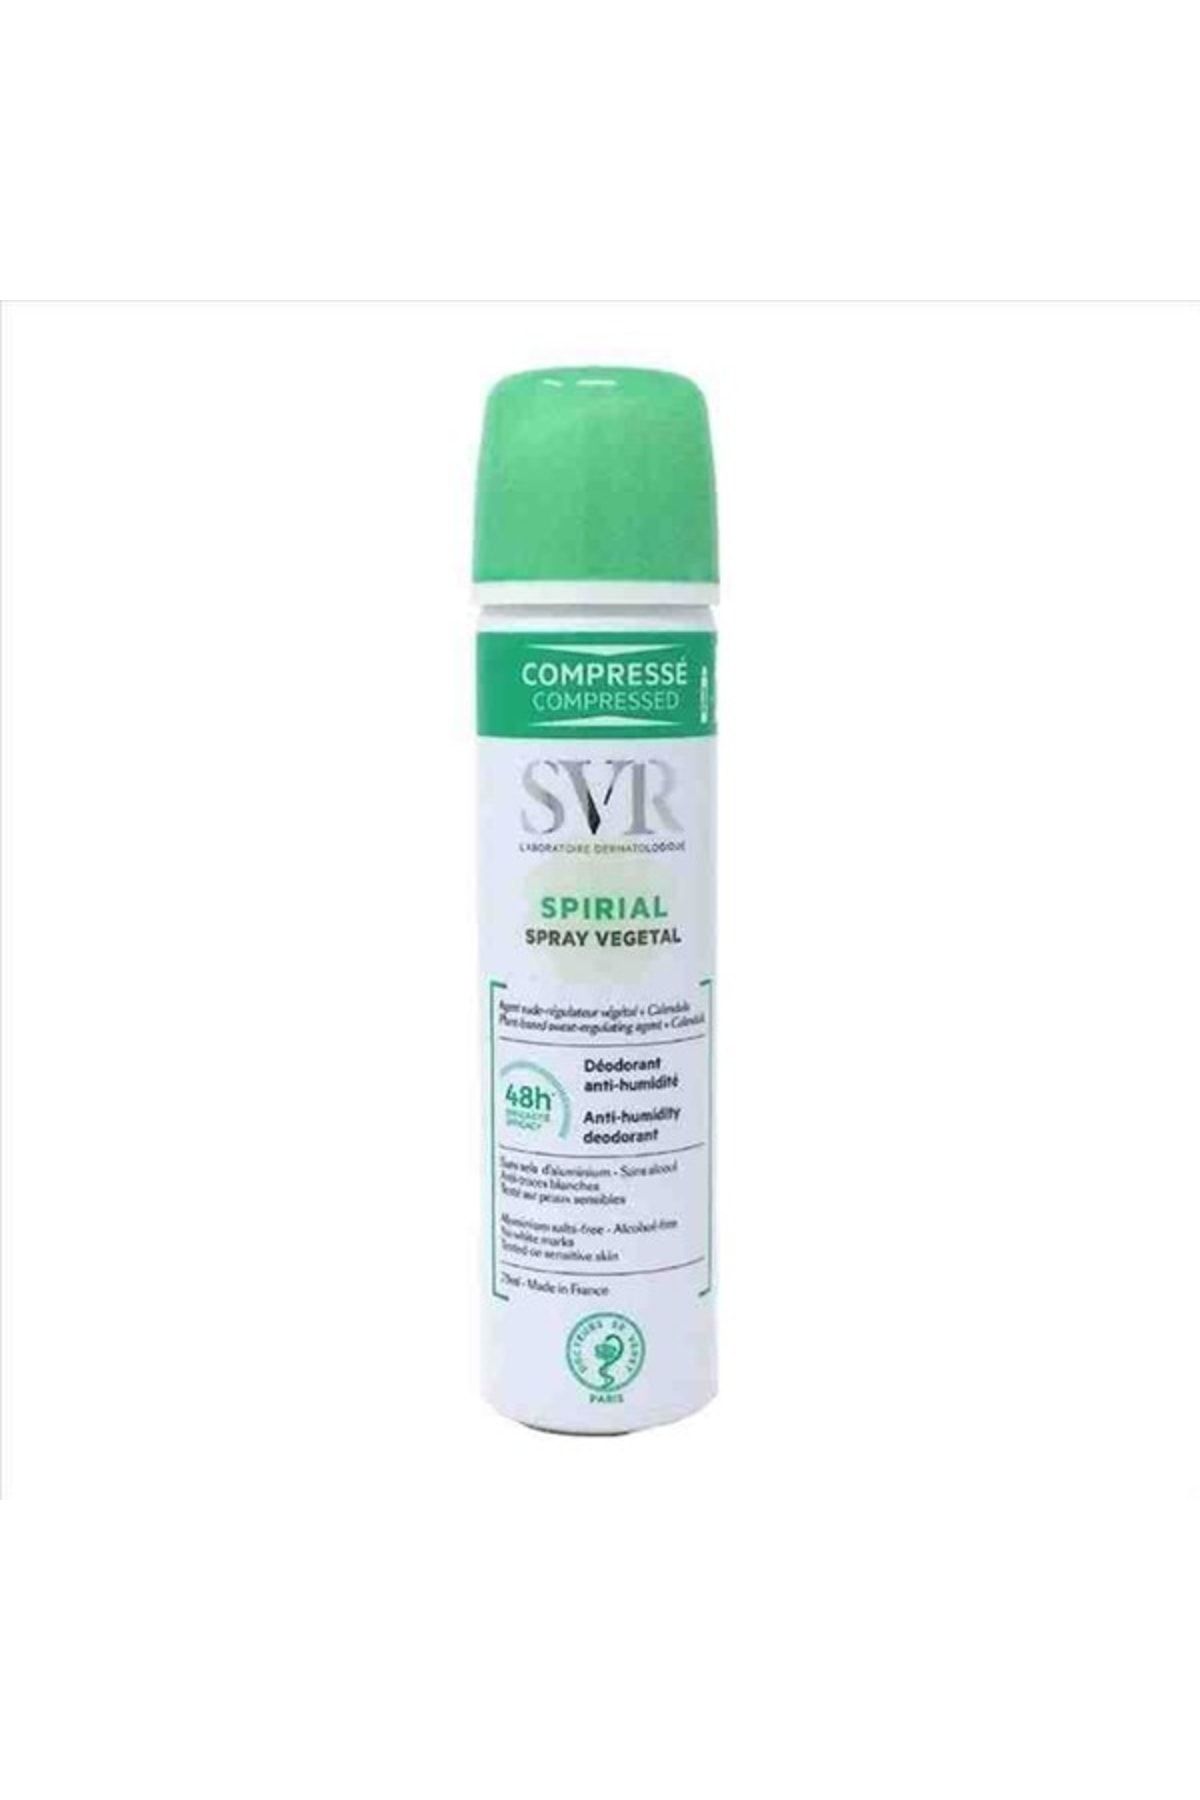 SVR Spirial Spray Vegetal Deodorant 48h 75 Ml